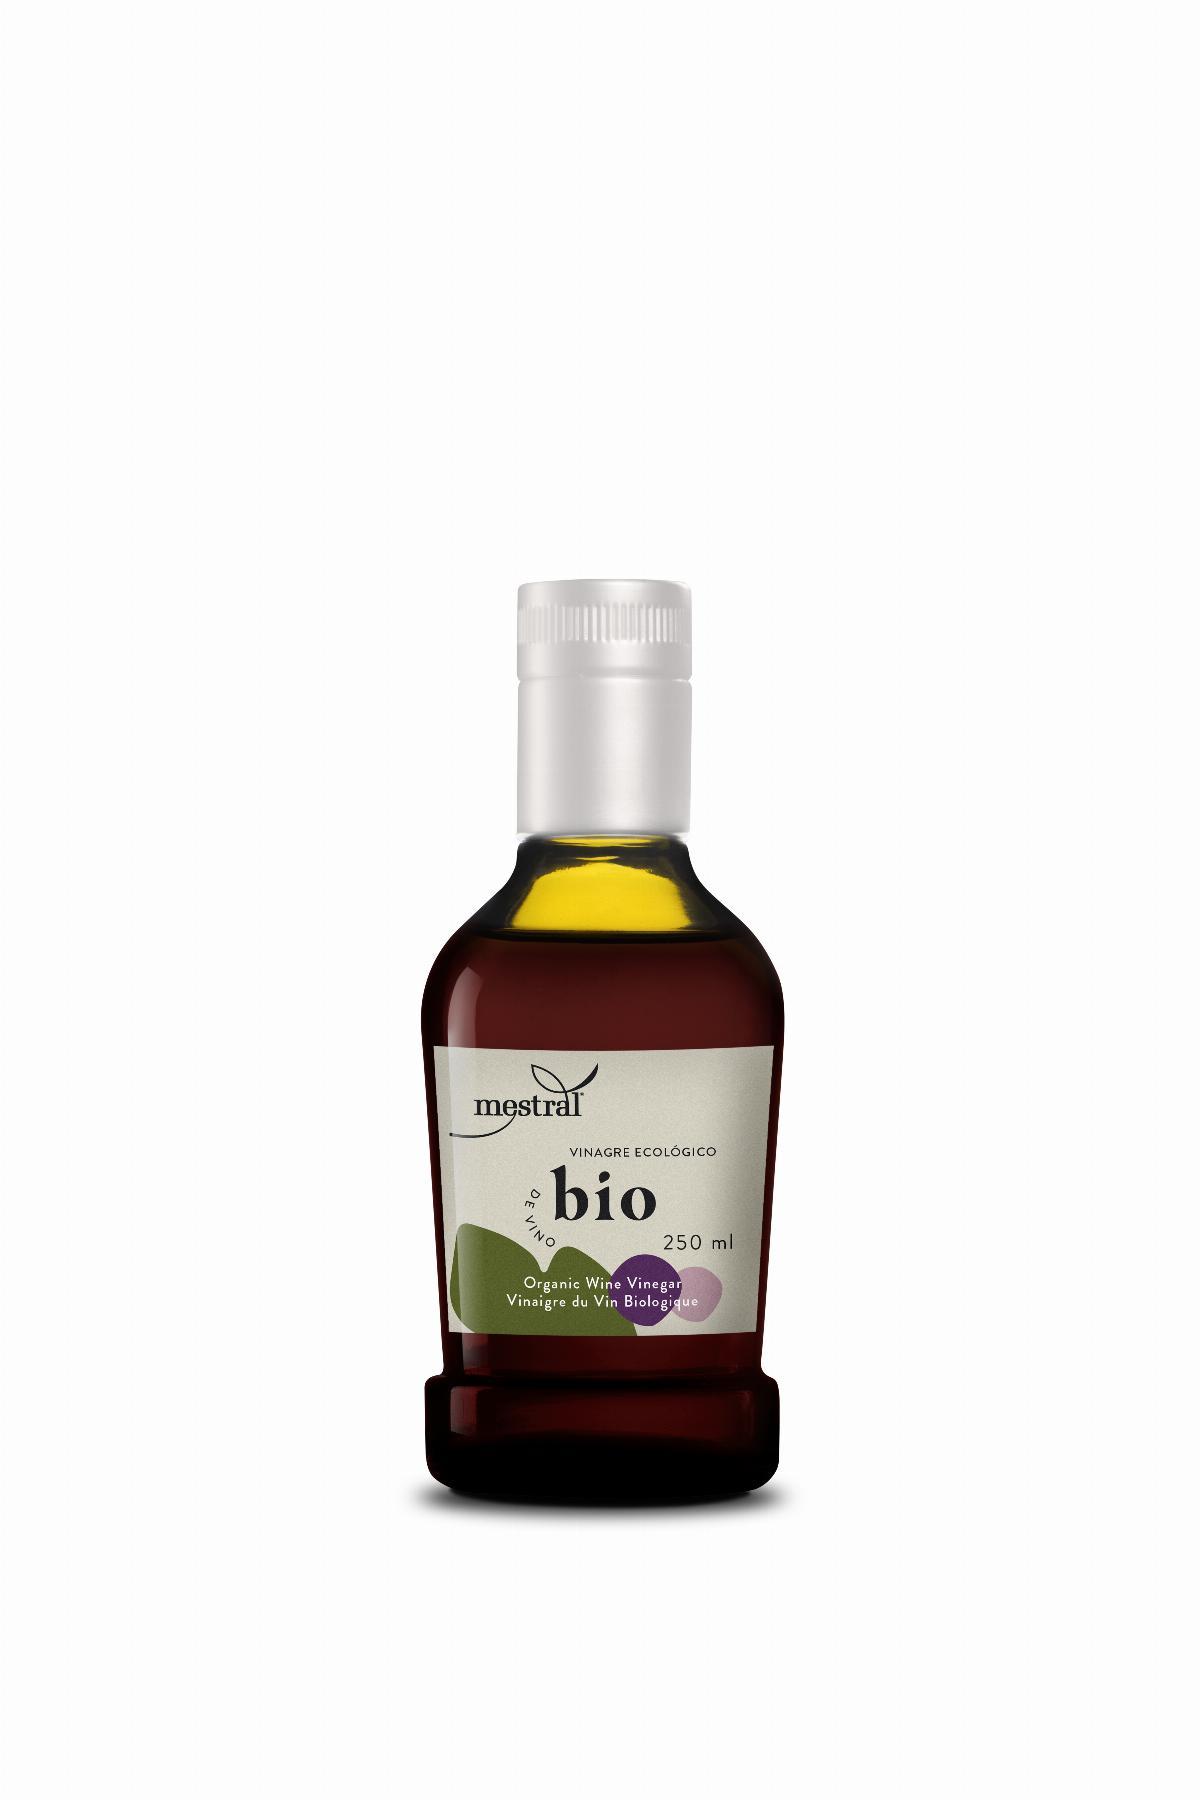 Vinegar - Organic Mestral Wine Vinegar glass bottle 250ml - Operator CT/005725/E Controled by ES-ECO-019-CT. UE Farming - Mestral Cambrils